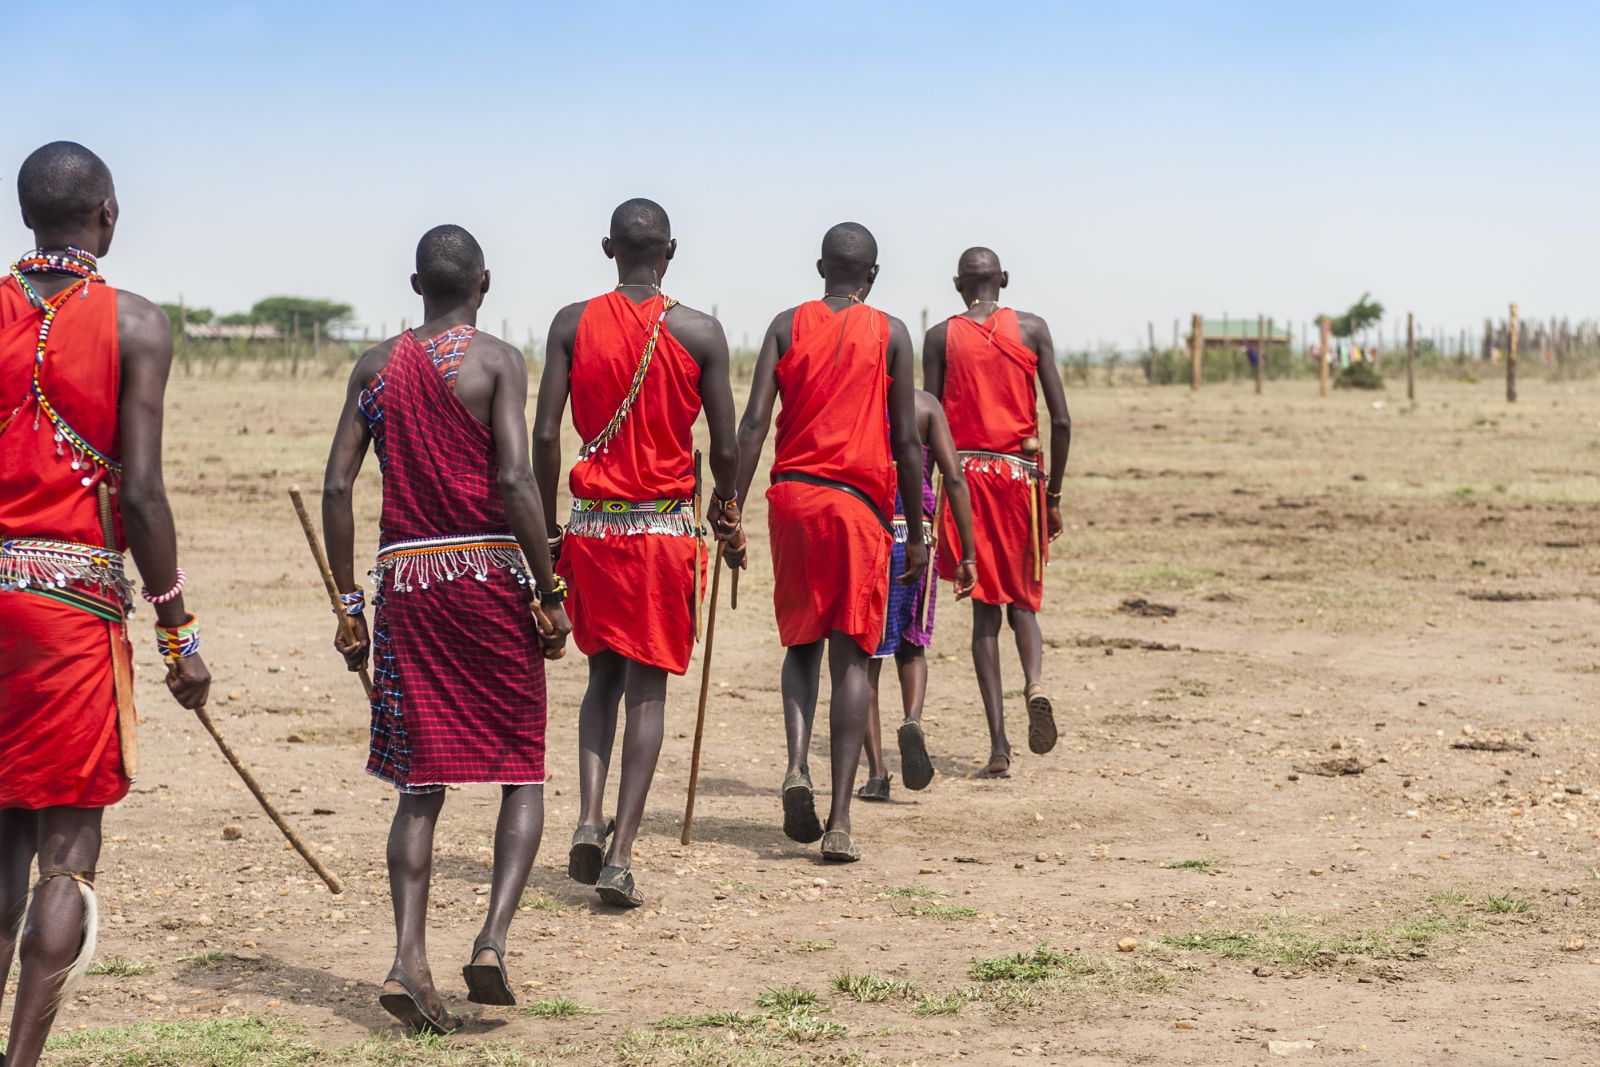 Masai warriors in traditional red dress walking through the plains in Kenya